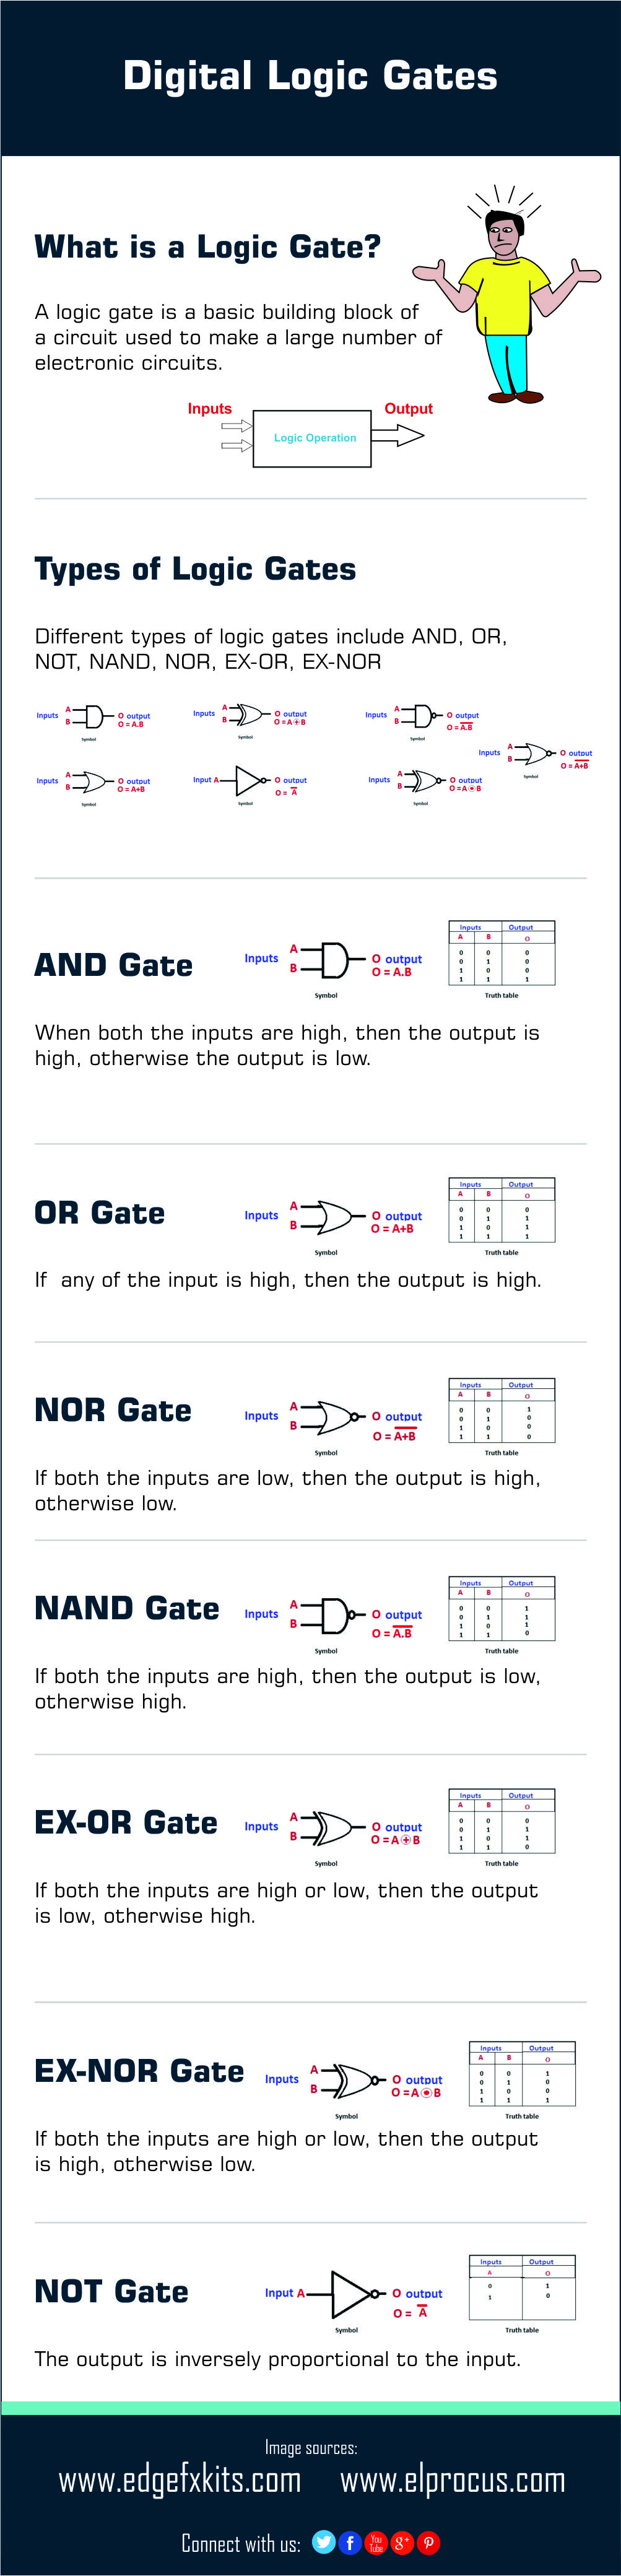 Different types of digital logic gates